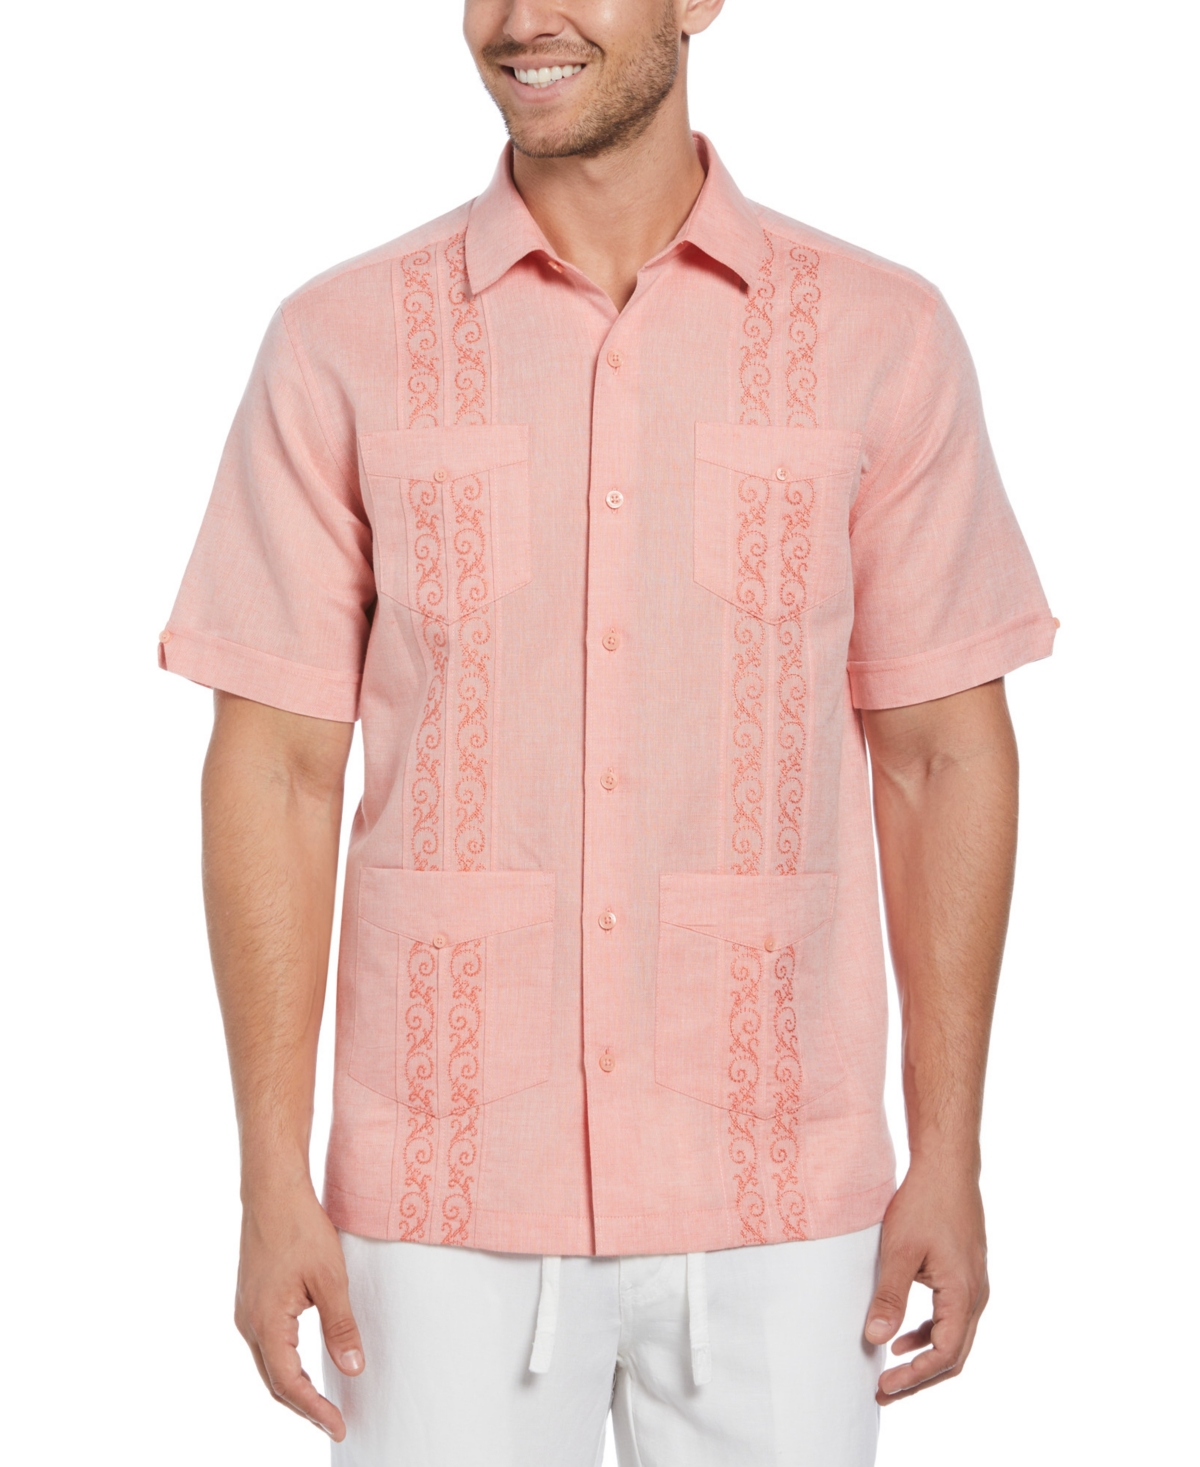 Men's Embroidered-Panel Linen Blend Guayabera Shirt - Coral